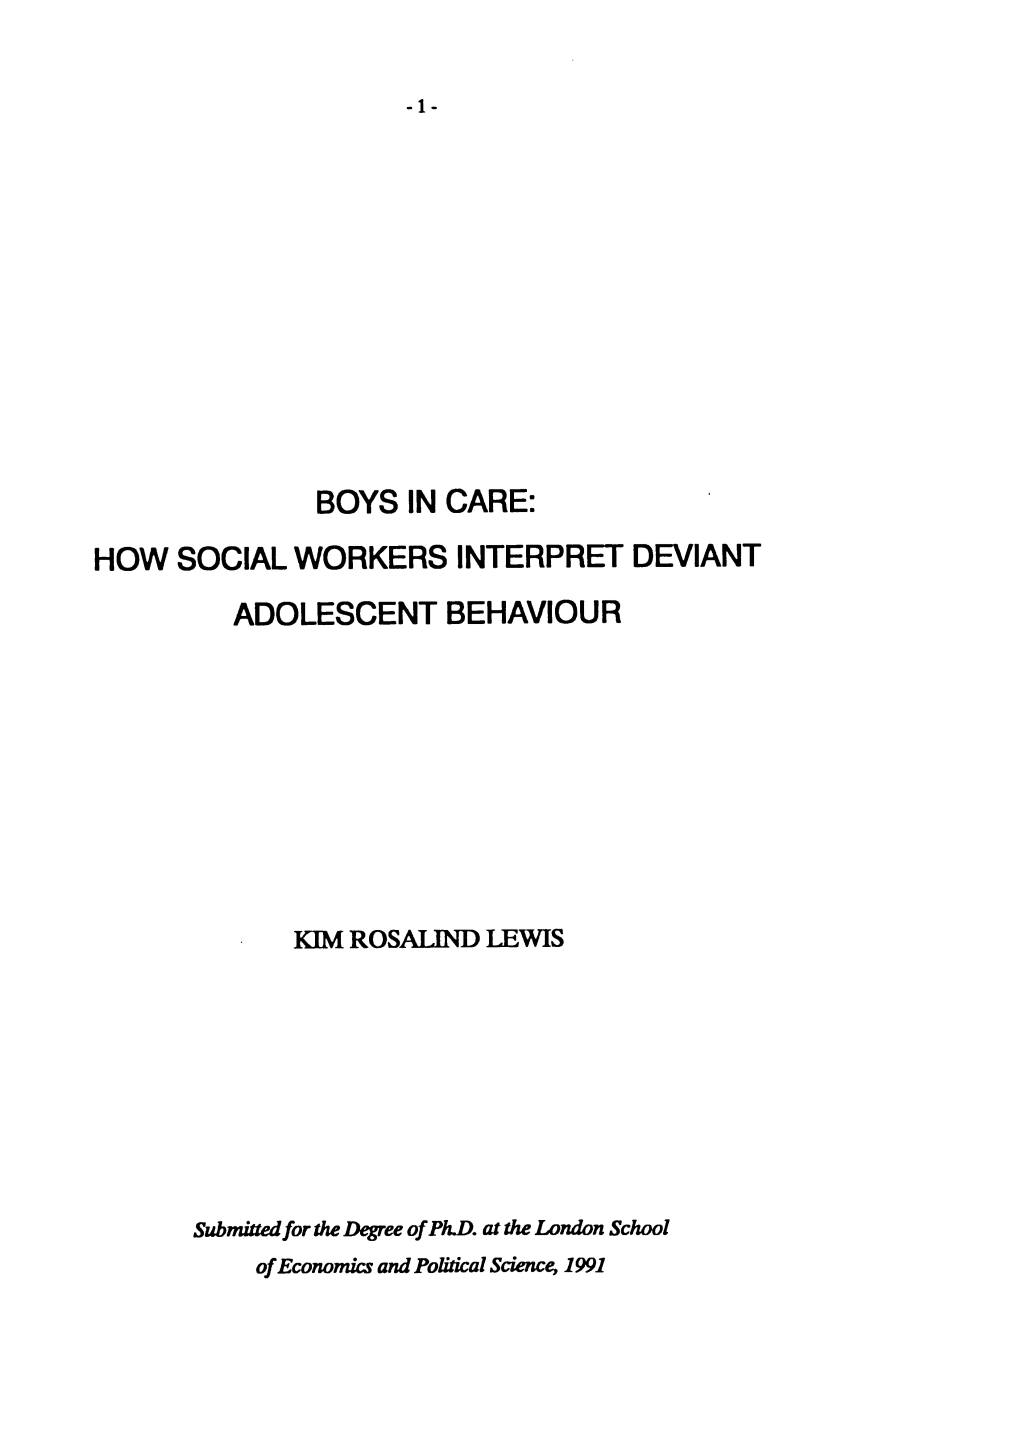 How Social Workers Interpret Deviant Adolescent Behaviour